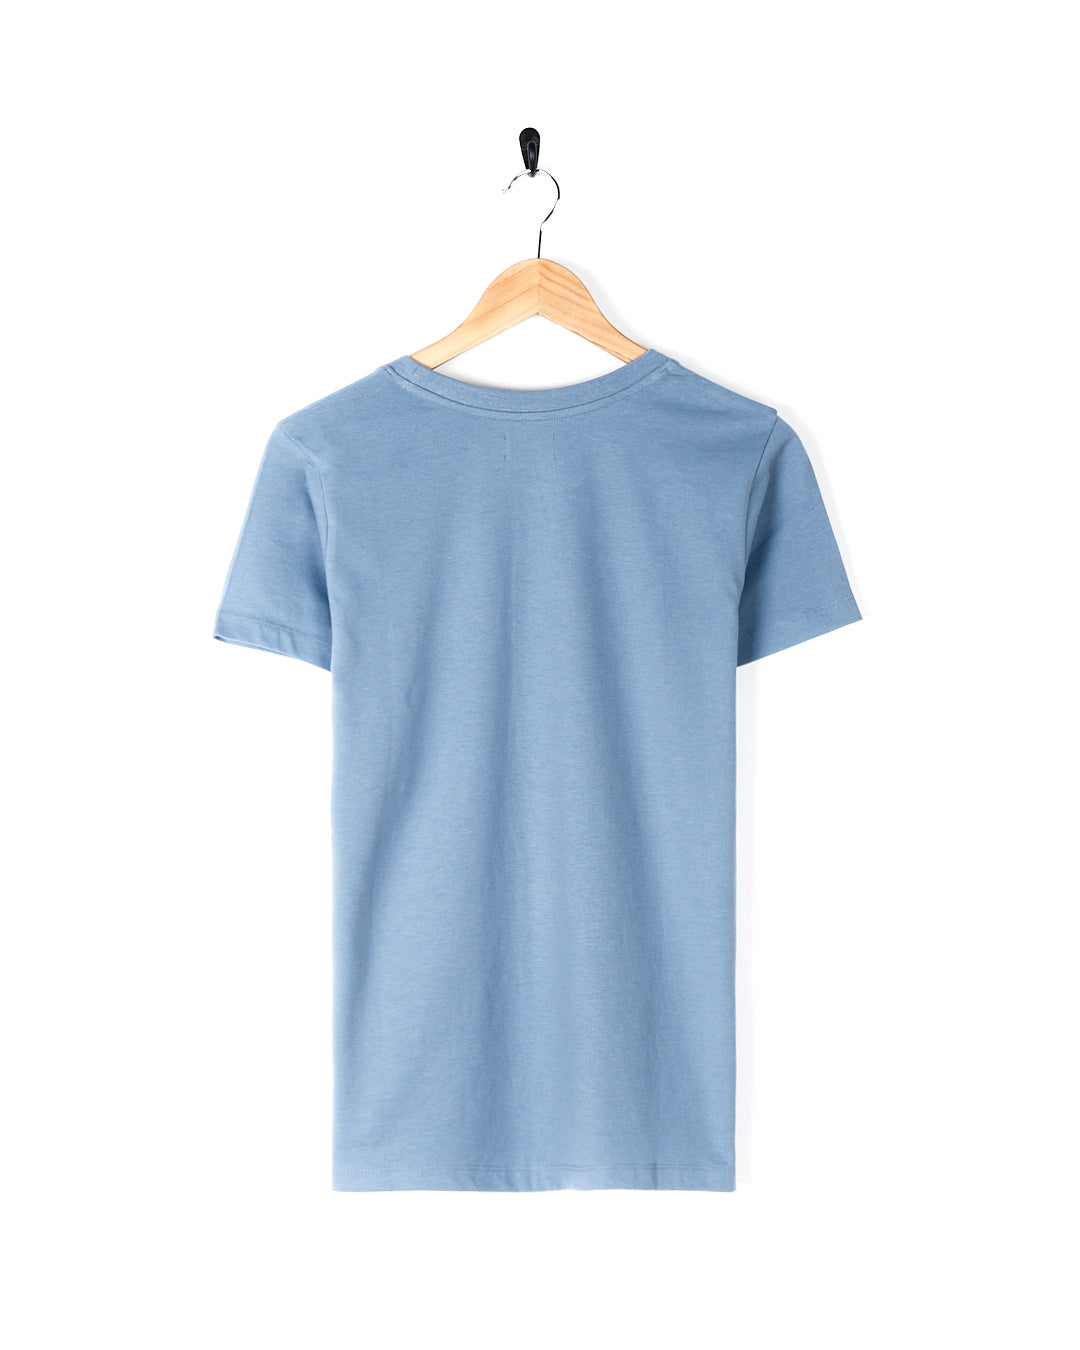 Retro Ribbon - Womens Short Sleeve T-Shirt - Light Blue